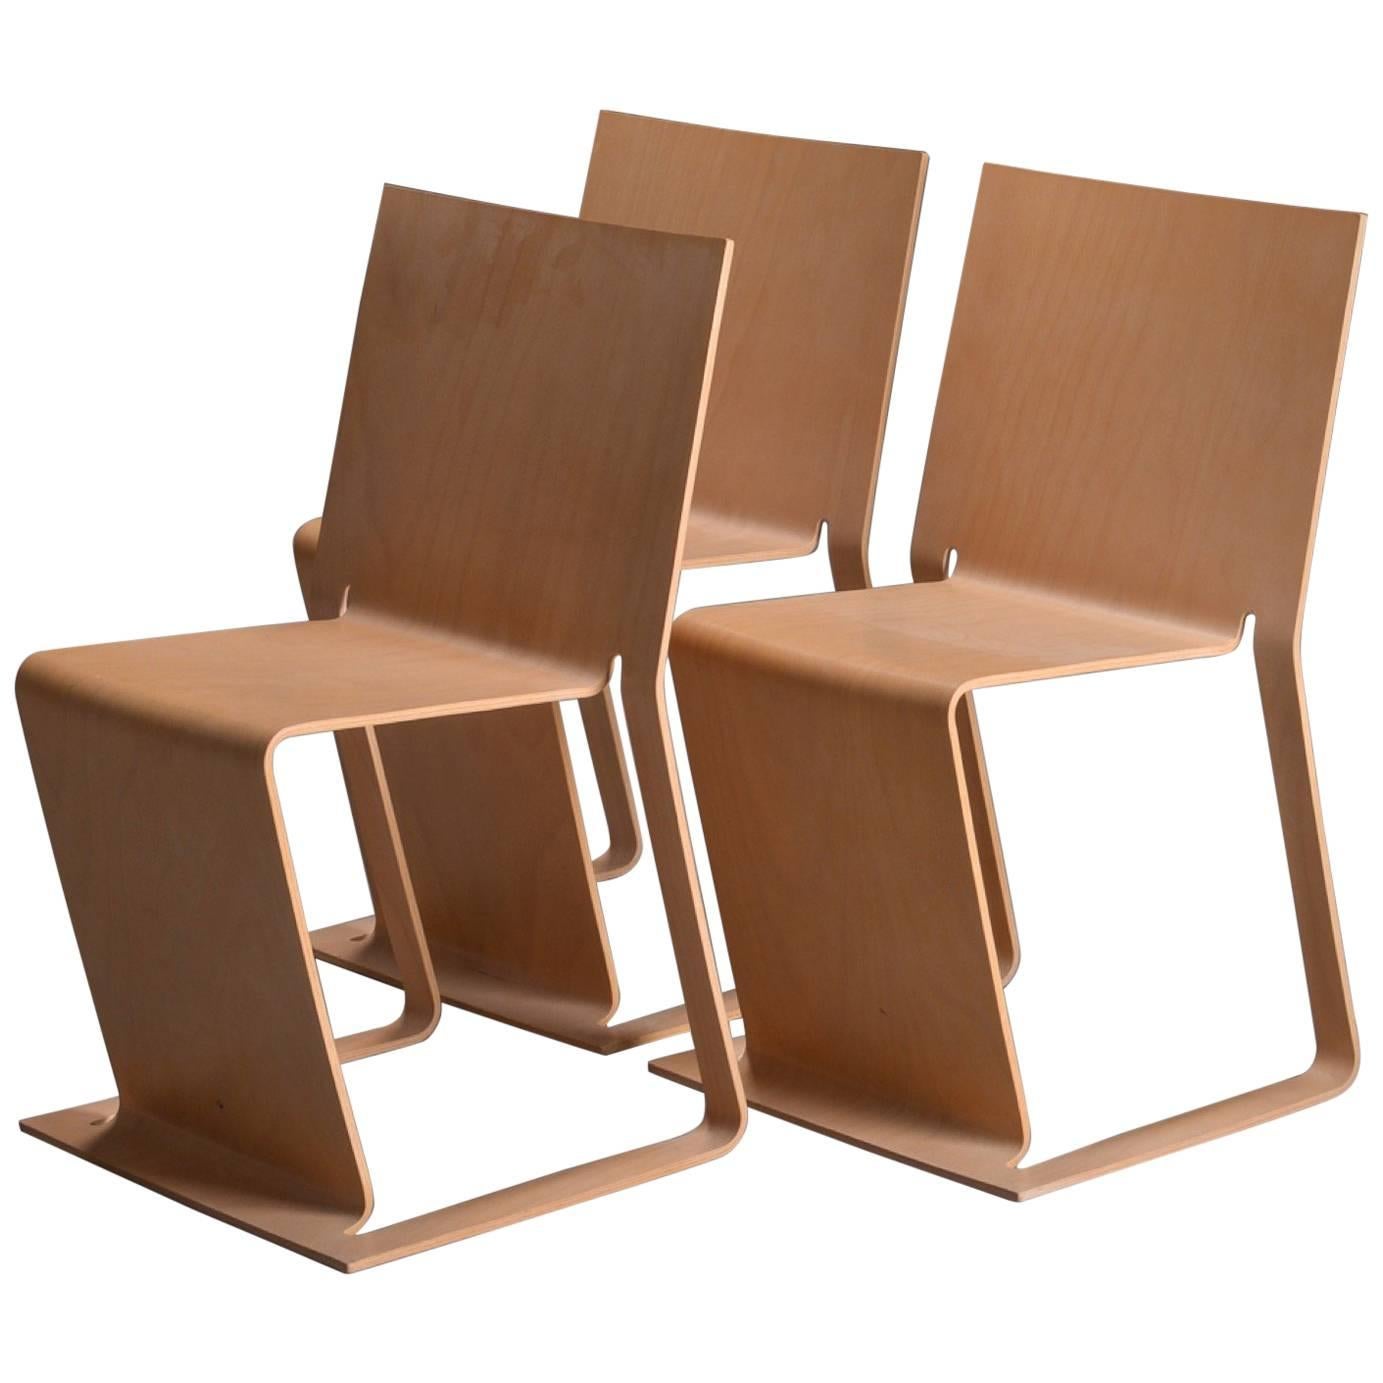 Three Stacked Swedish lForm Chairs